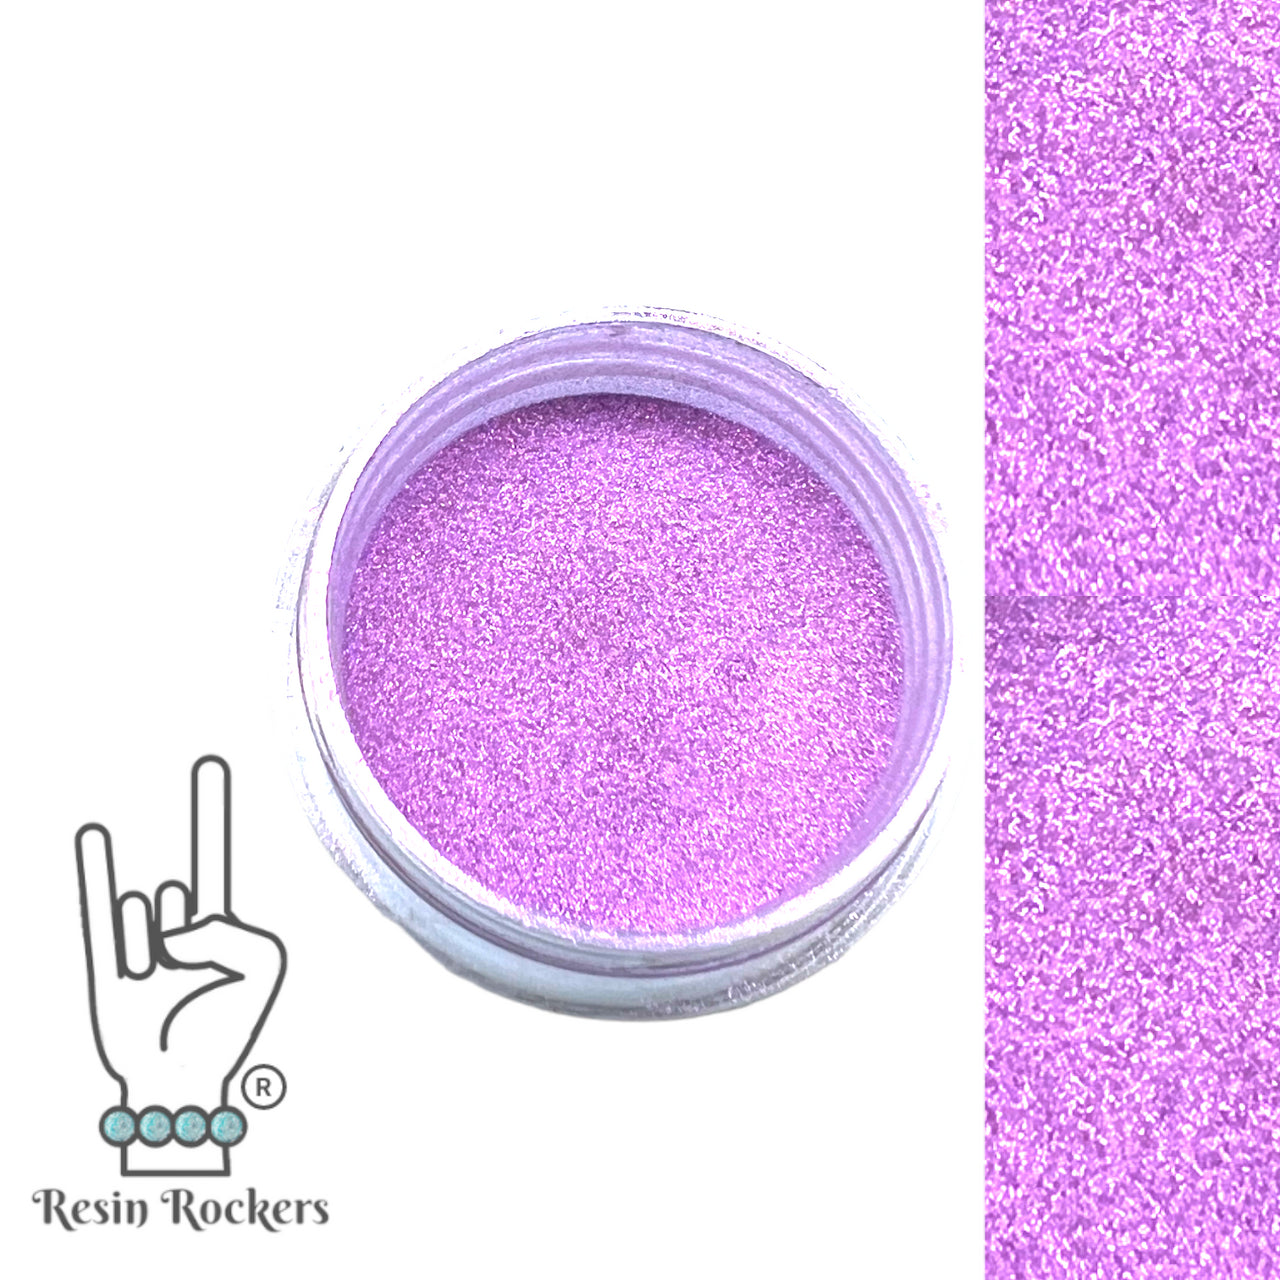 Resin Rockers Premium Color-shift Chameleon Pigment Powder Ultra Shine Lilac Bush